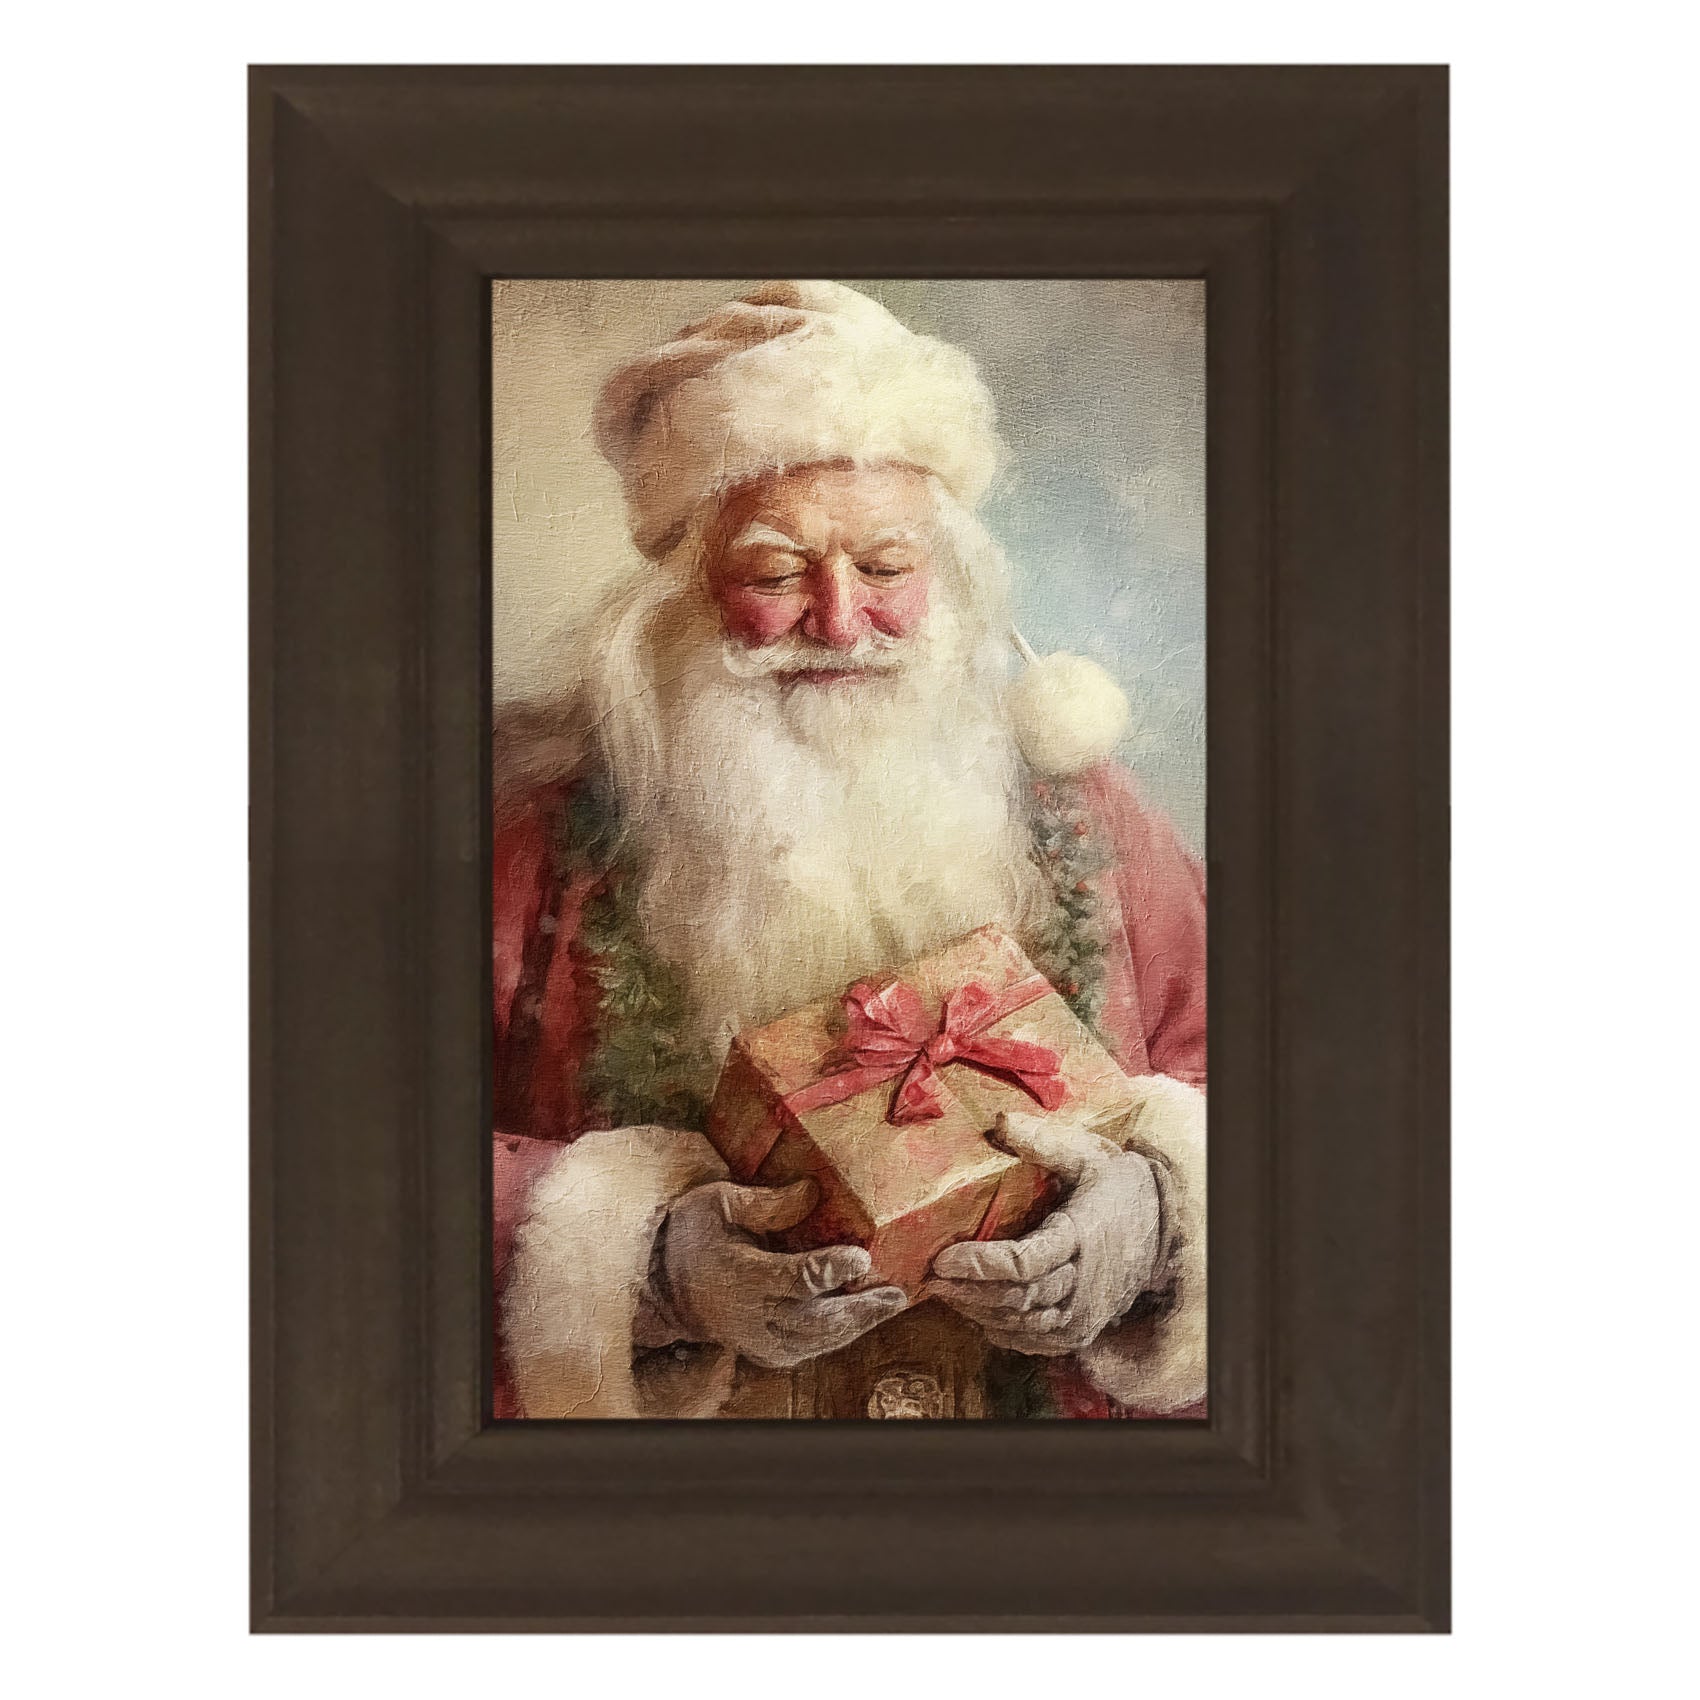 Old world Santa holding present